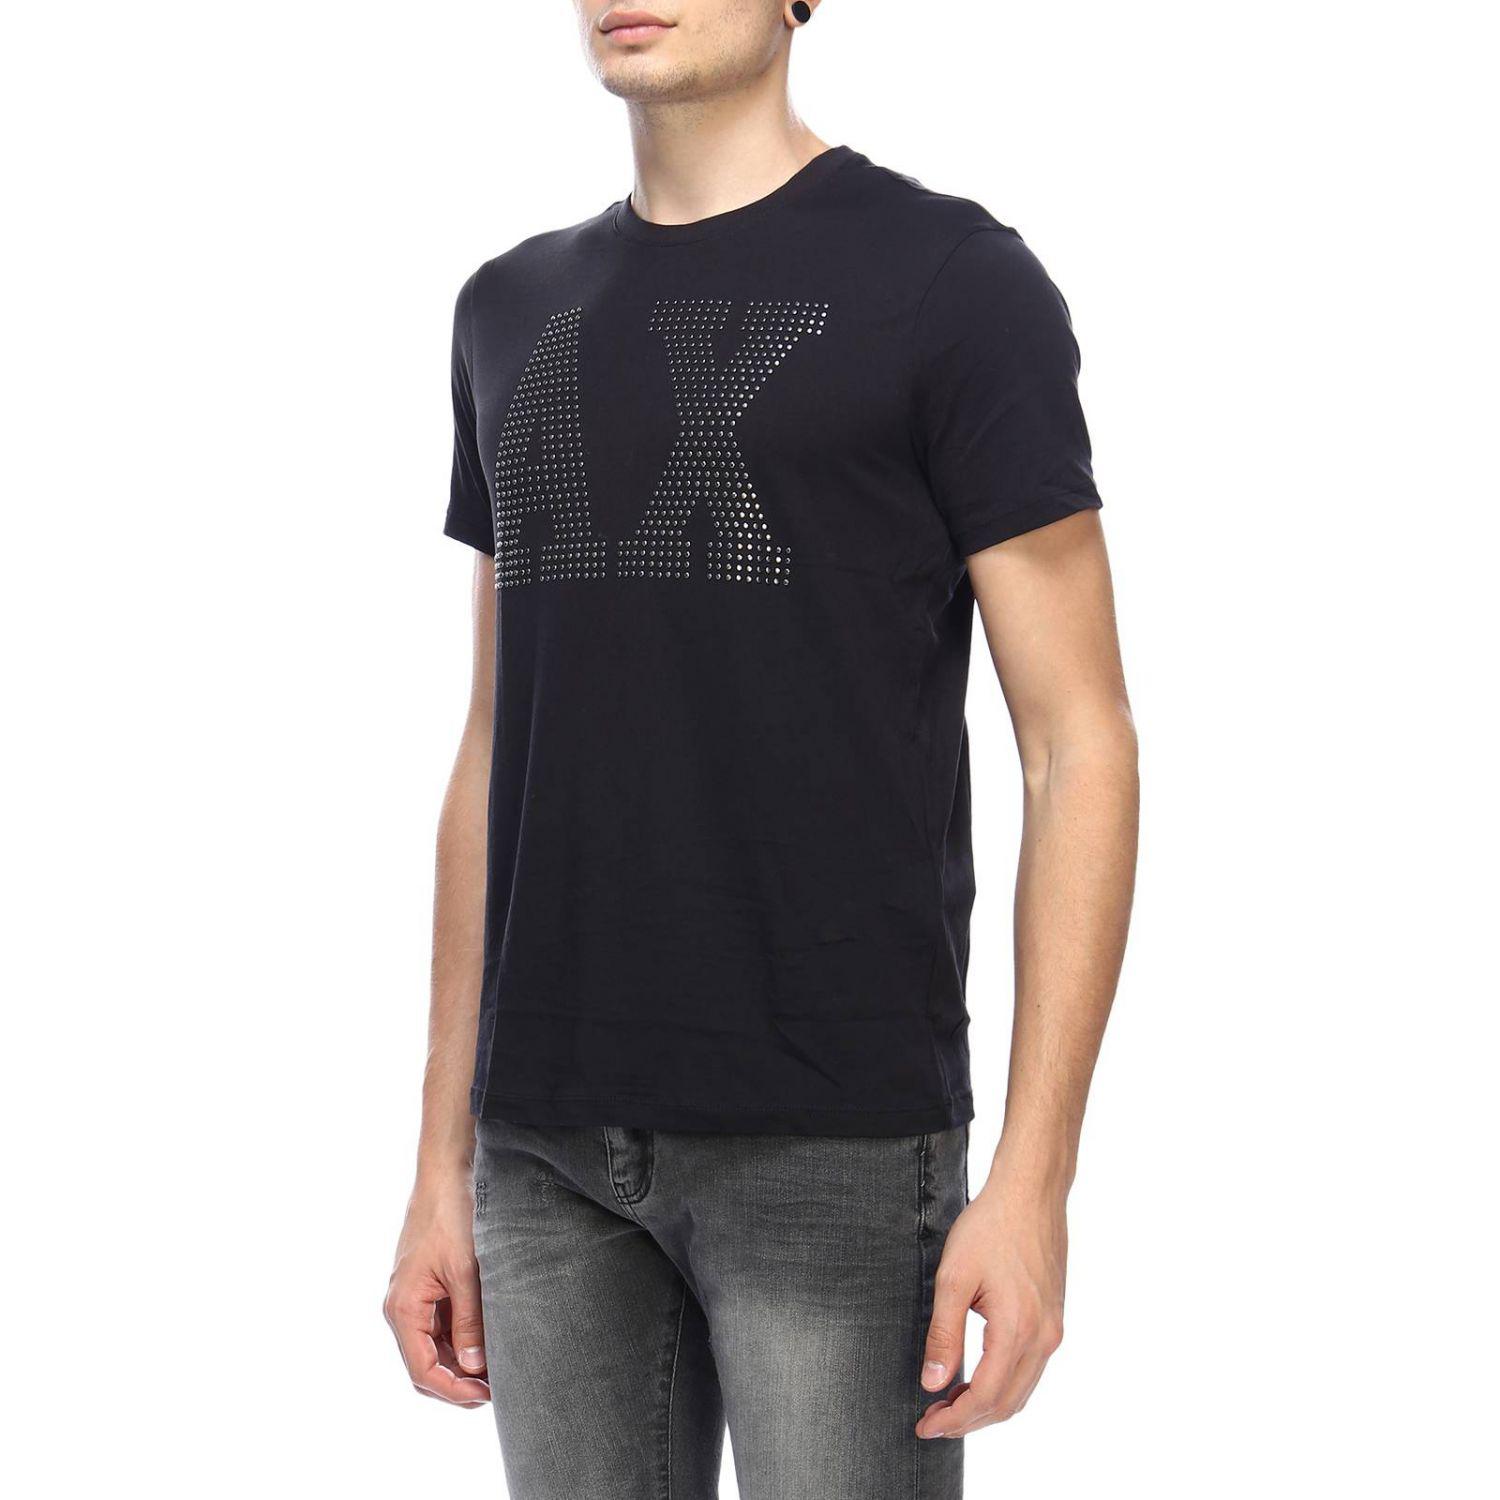 Armani Exchange T-shirt Men in Black for Men - Lyst